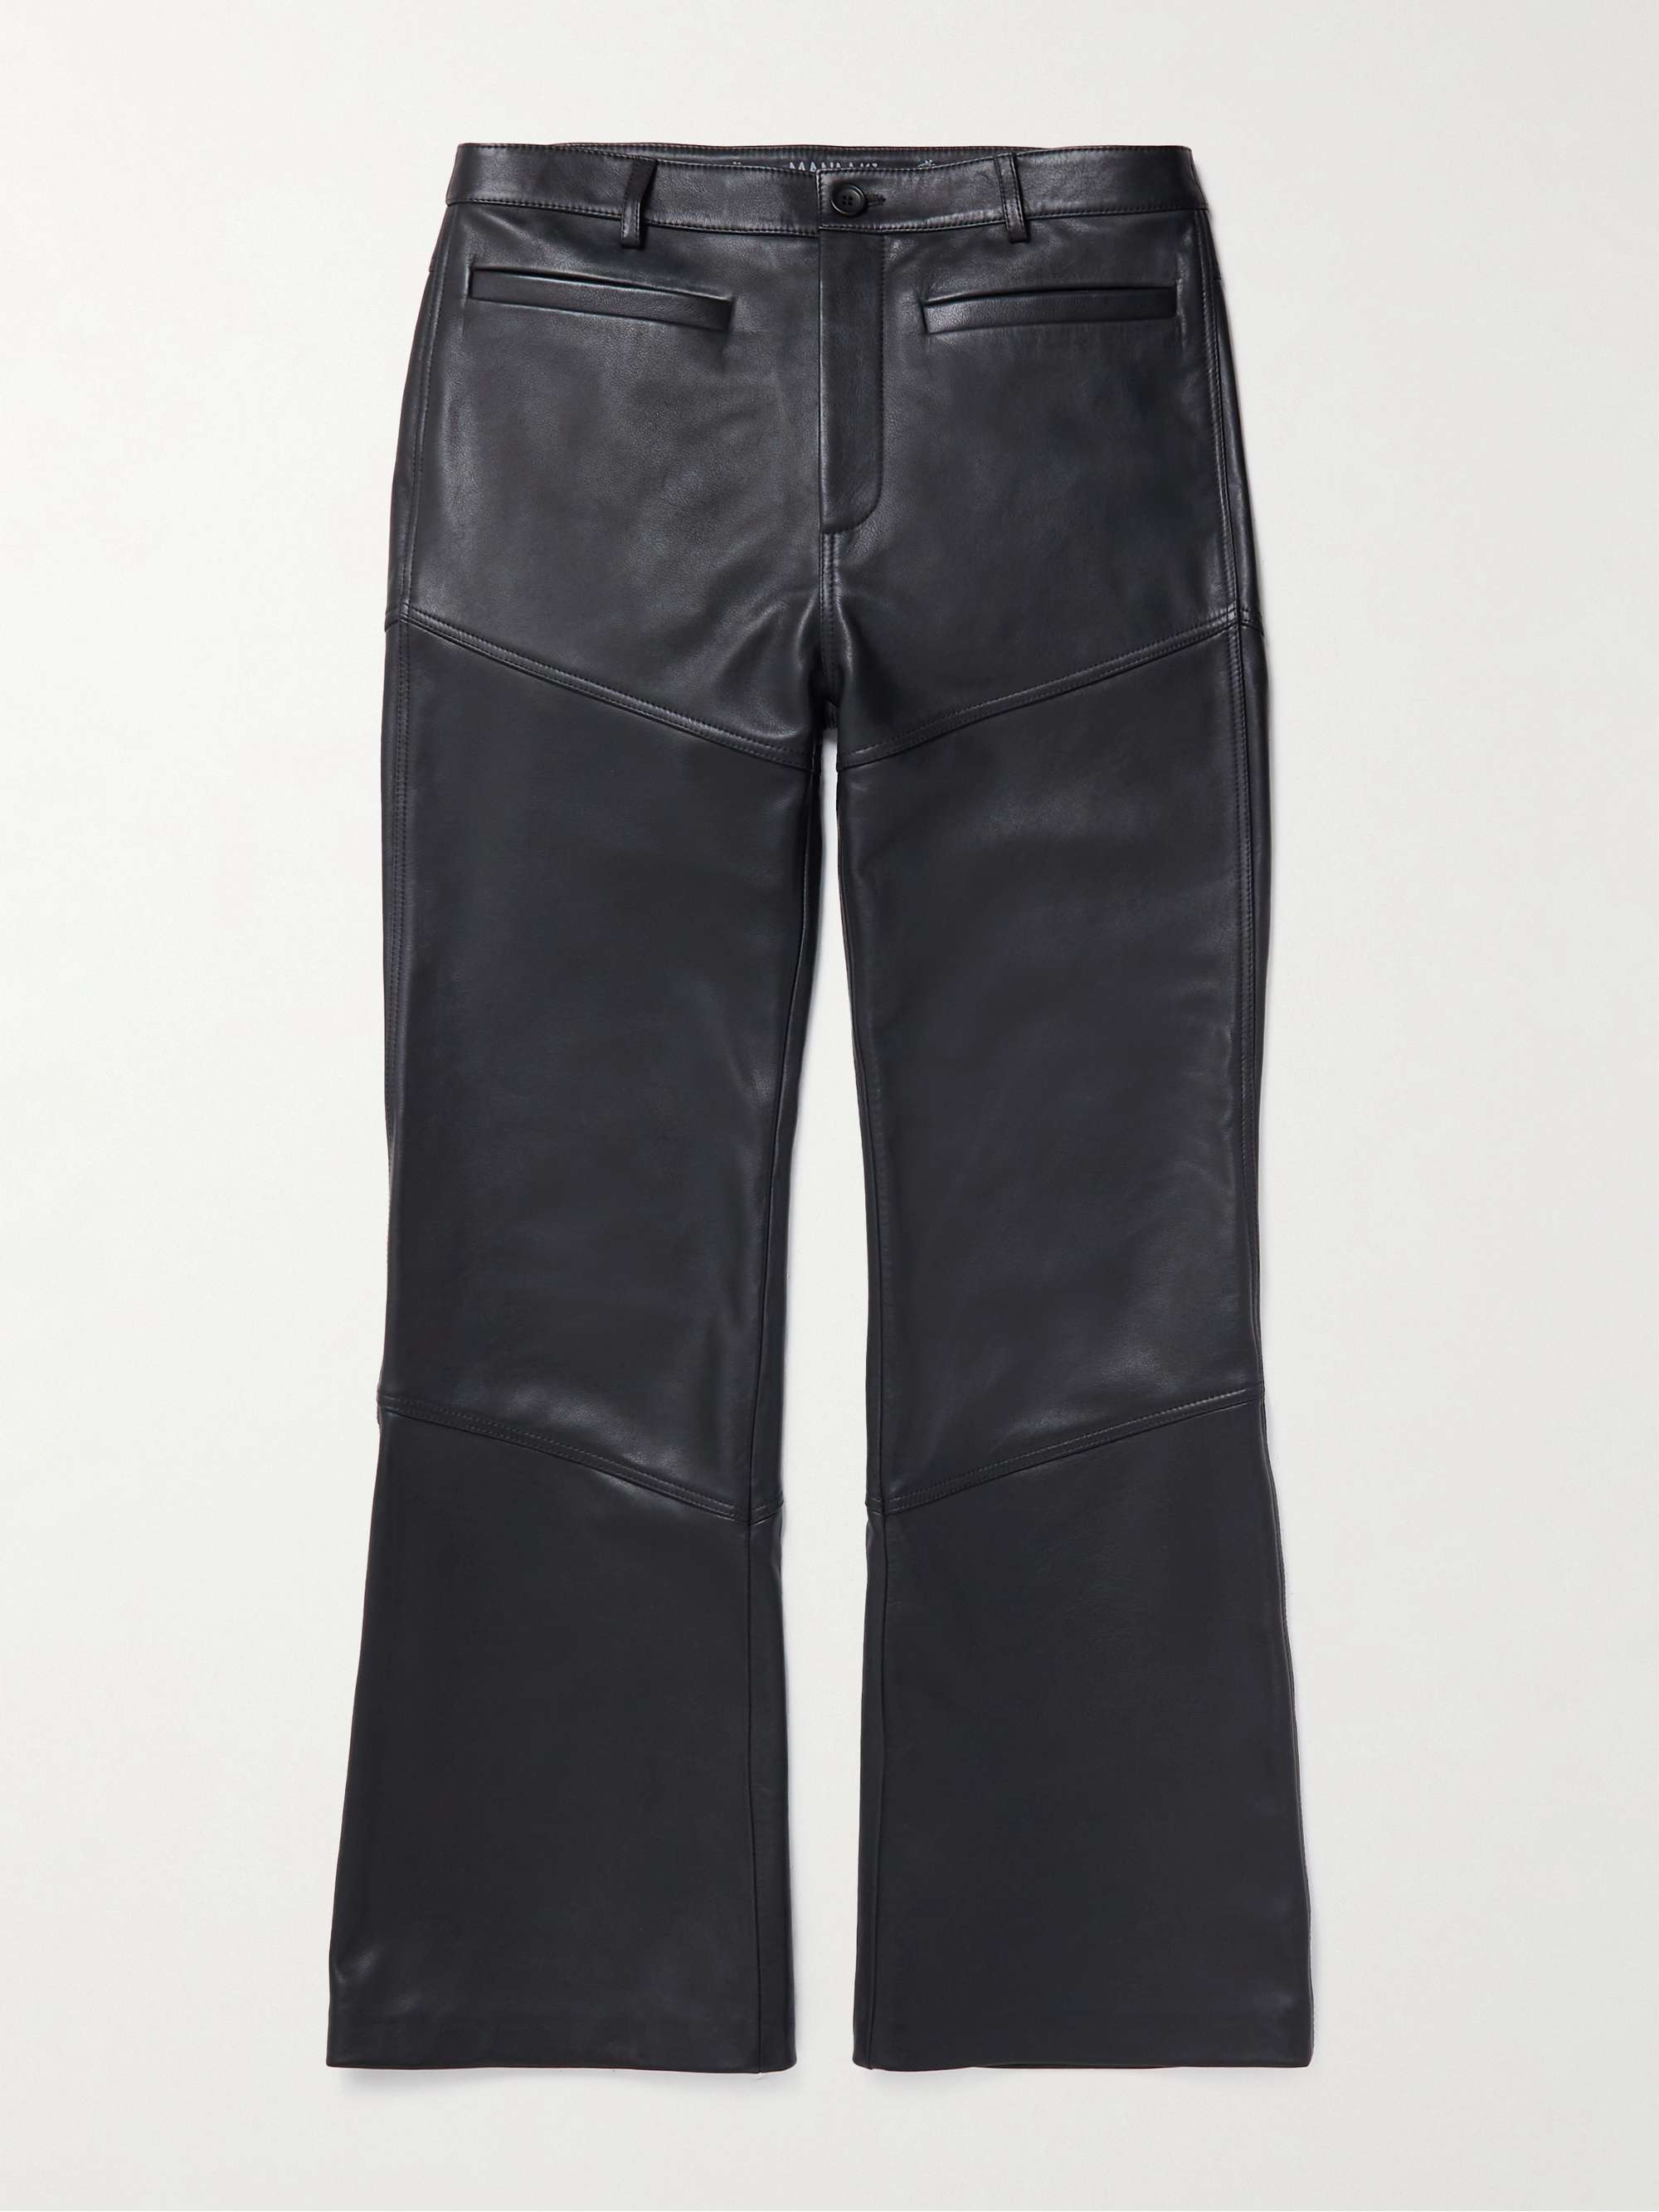 MANAAKI Tahi Flared Leather Pants for Men